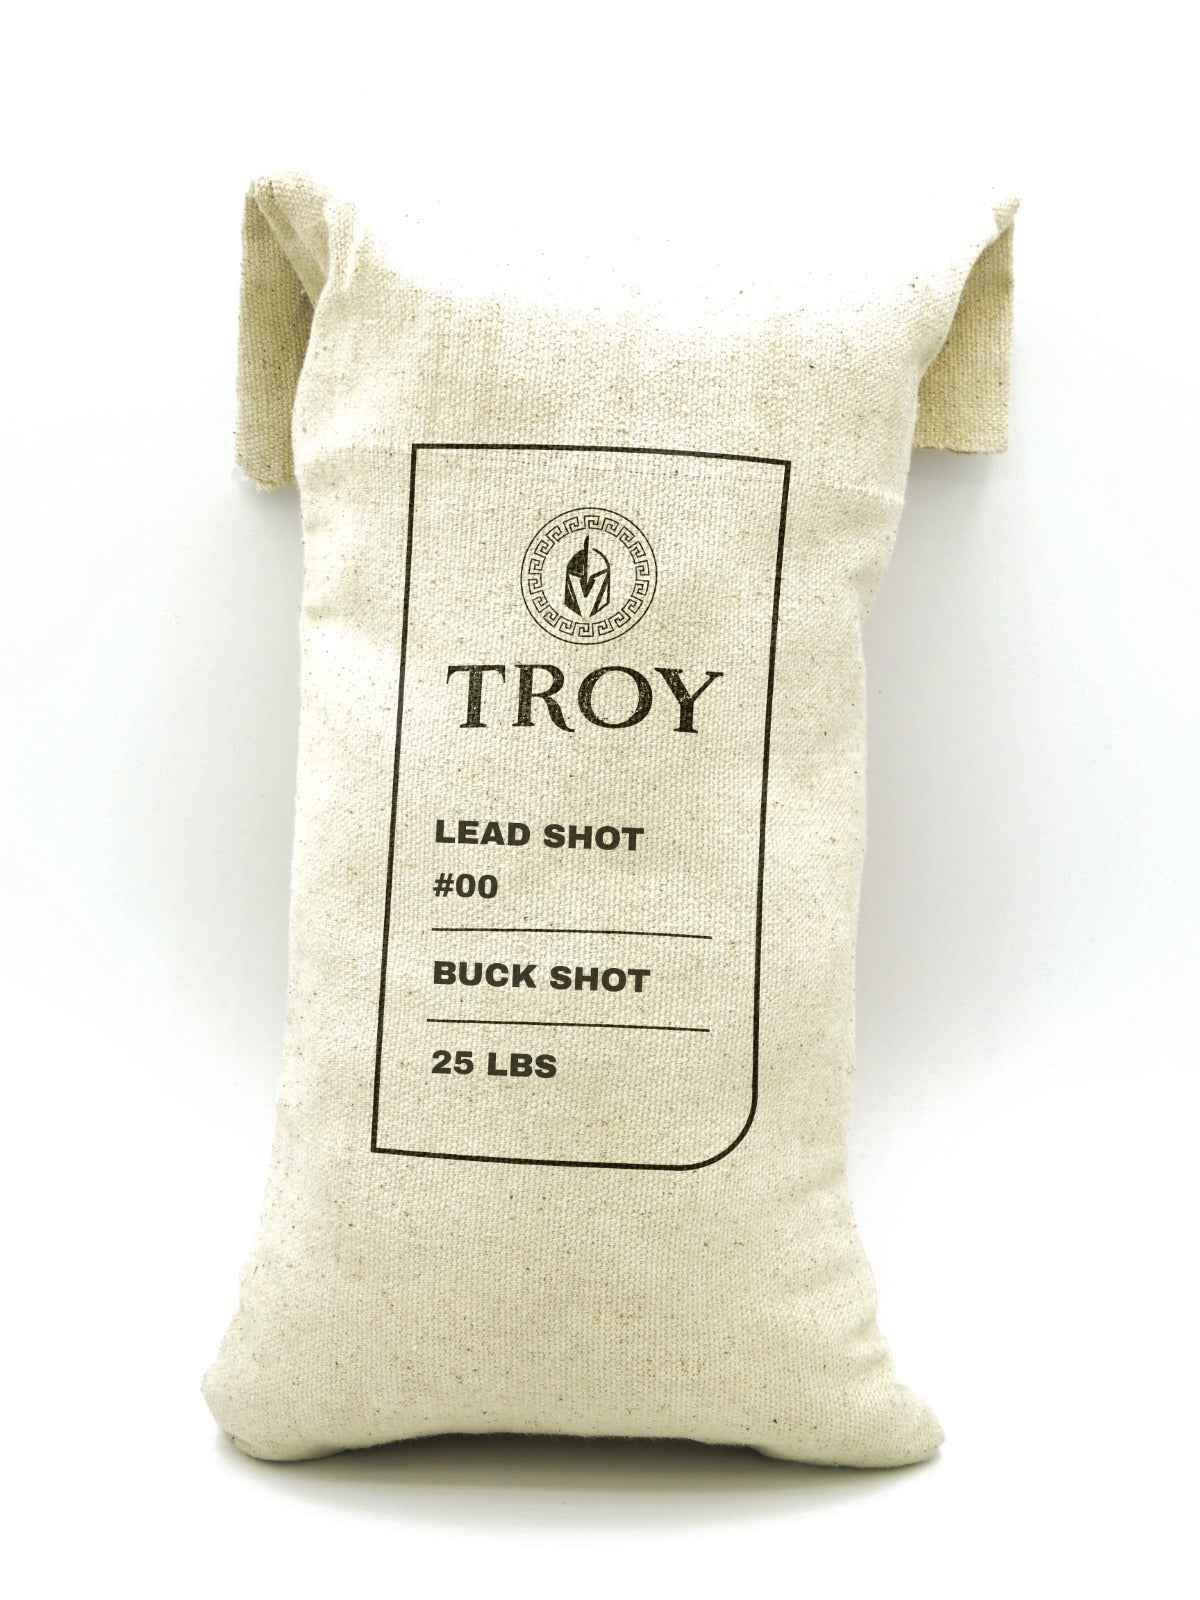 Troy Lead Shot # 00 Buck Shot 25 Lbs / bag